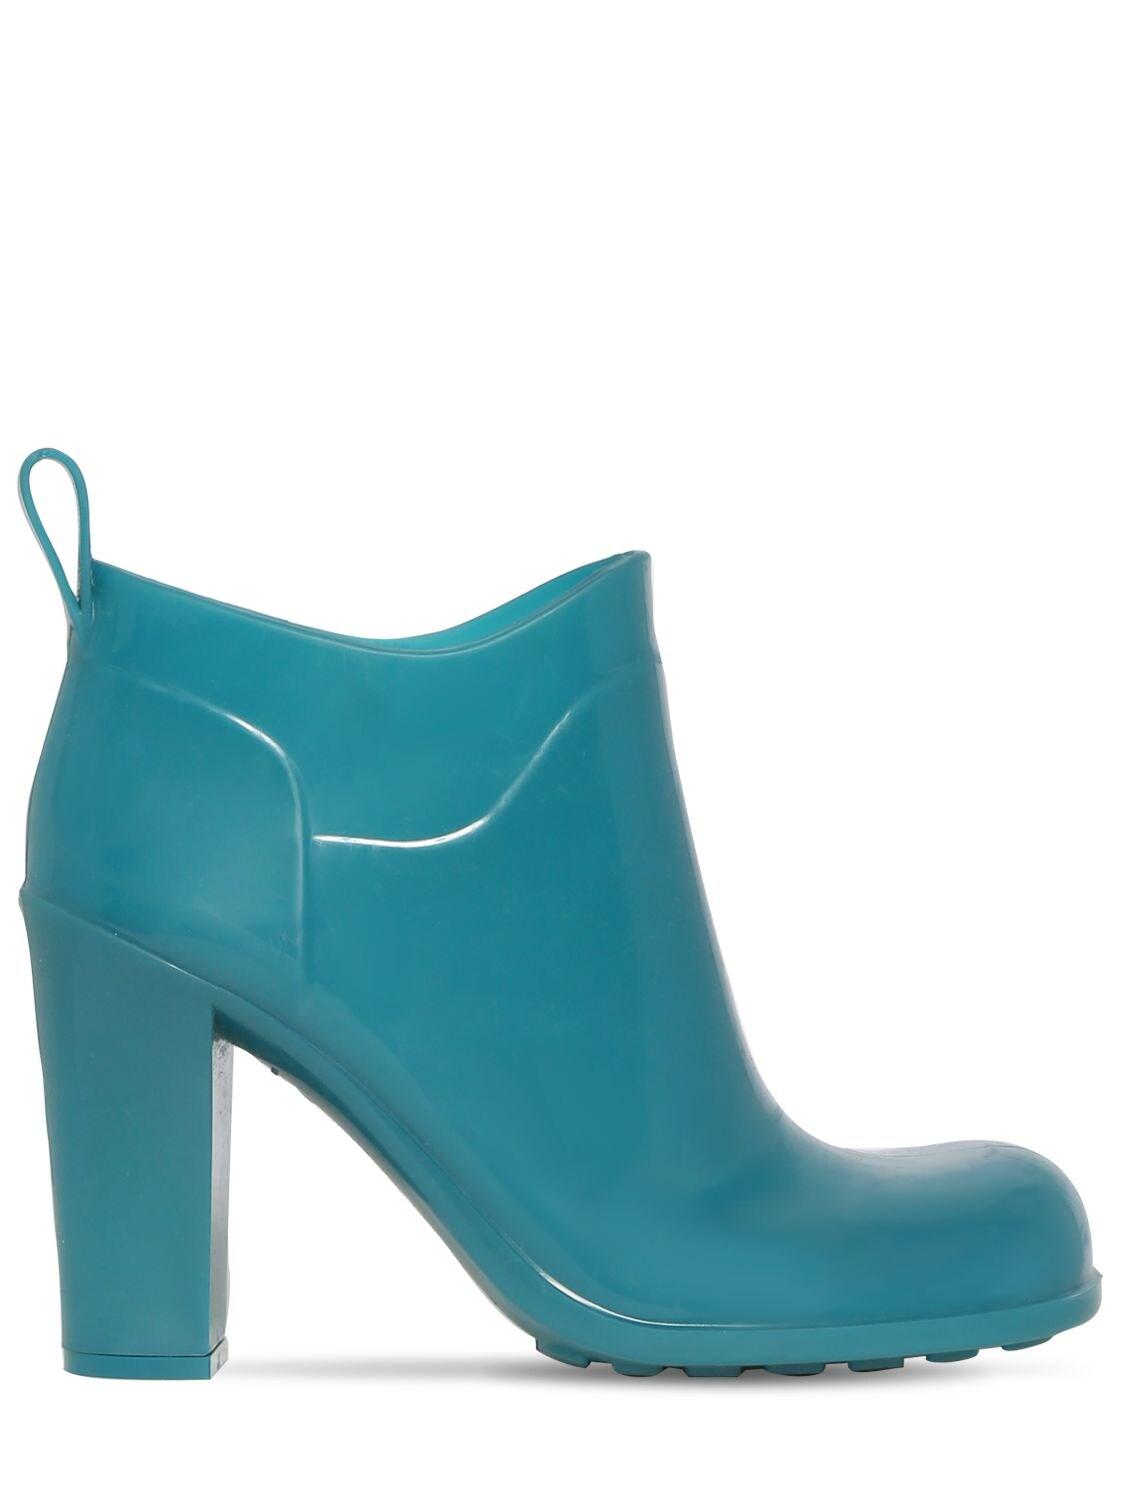 Bottega Veneta 90mm Shine Rubber Ankle Boots in Blue - Lyst